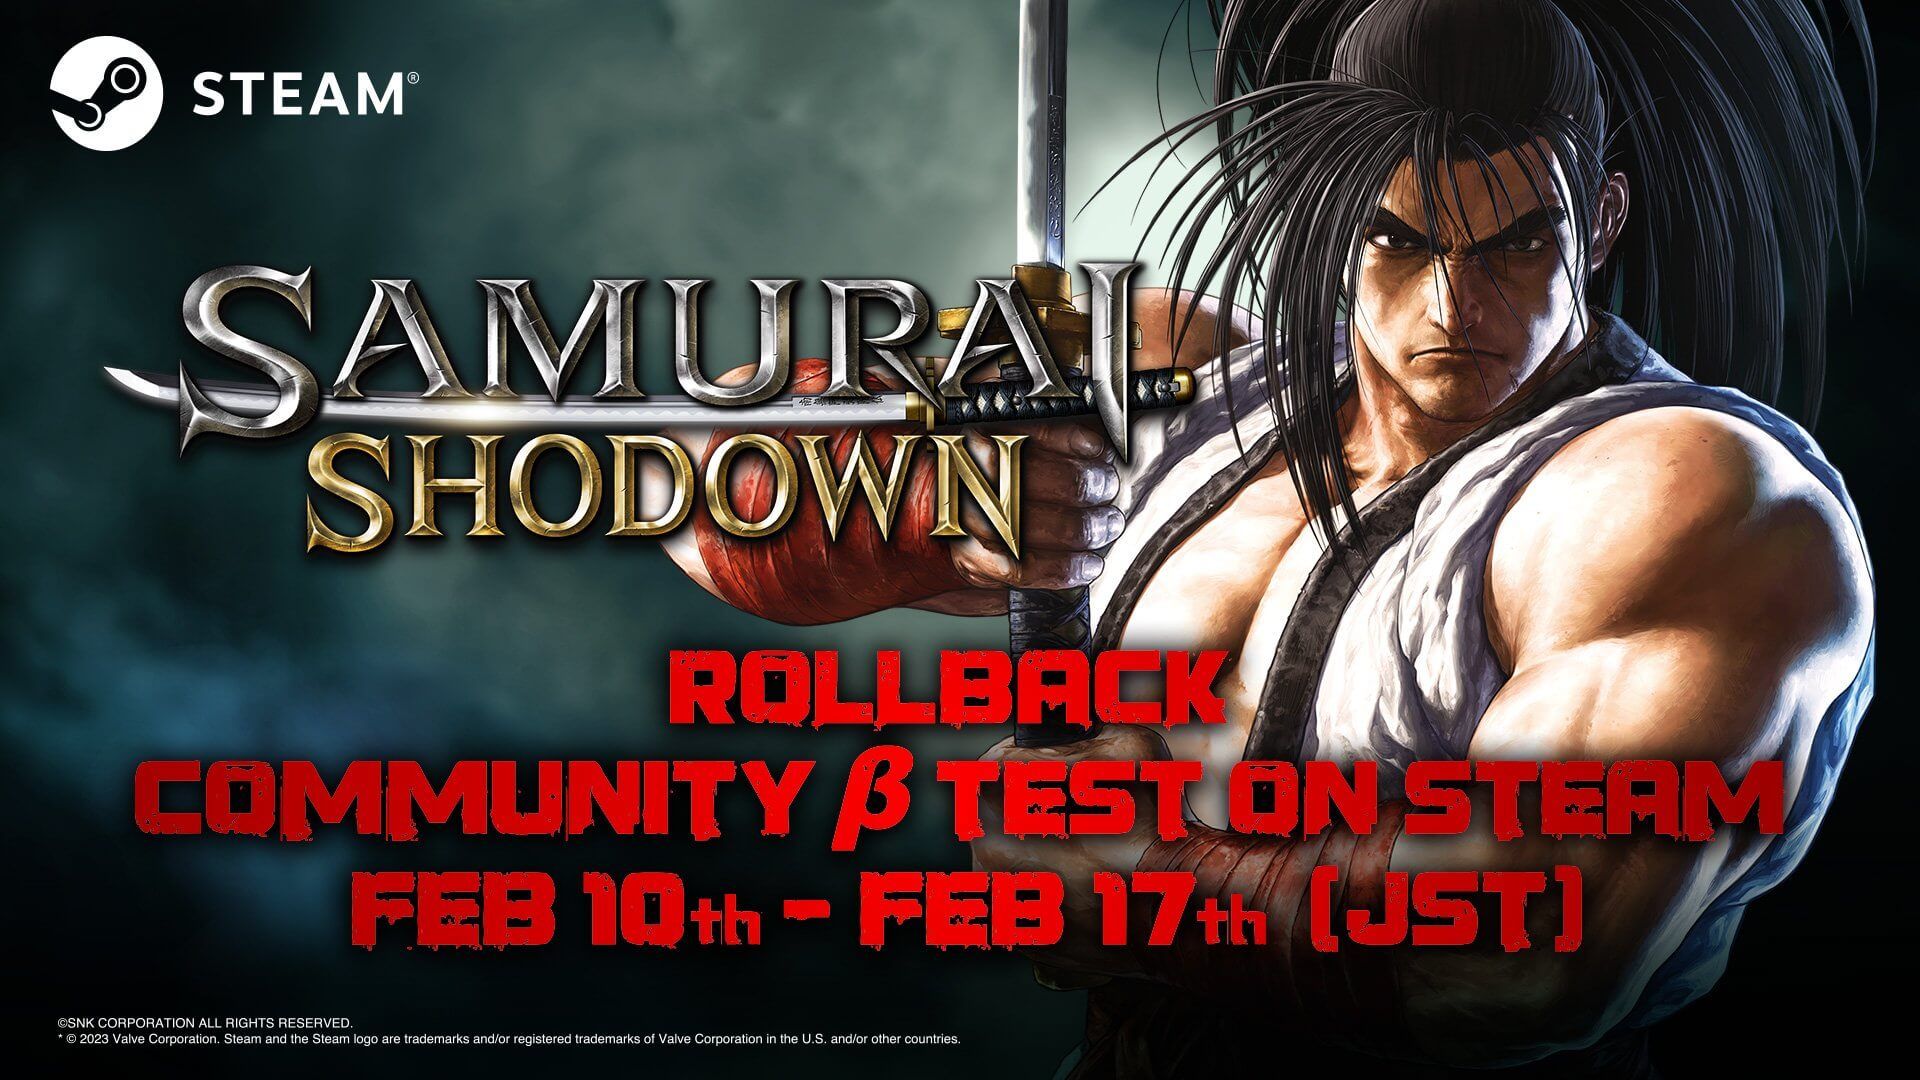 Samurai Shodown Rollback Netcode Steam Beta Test is Live